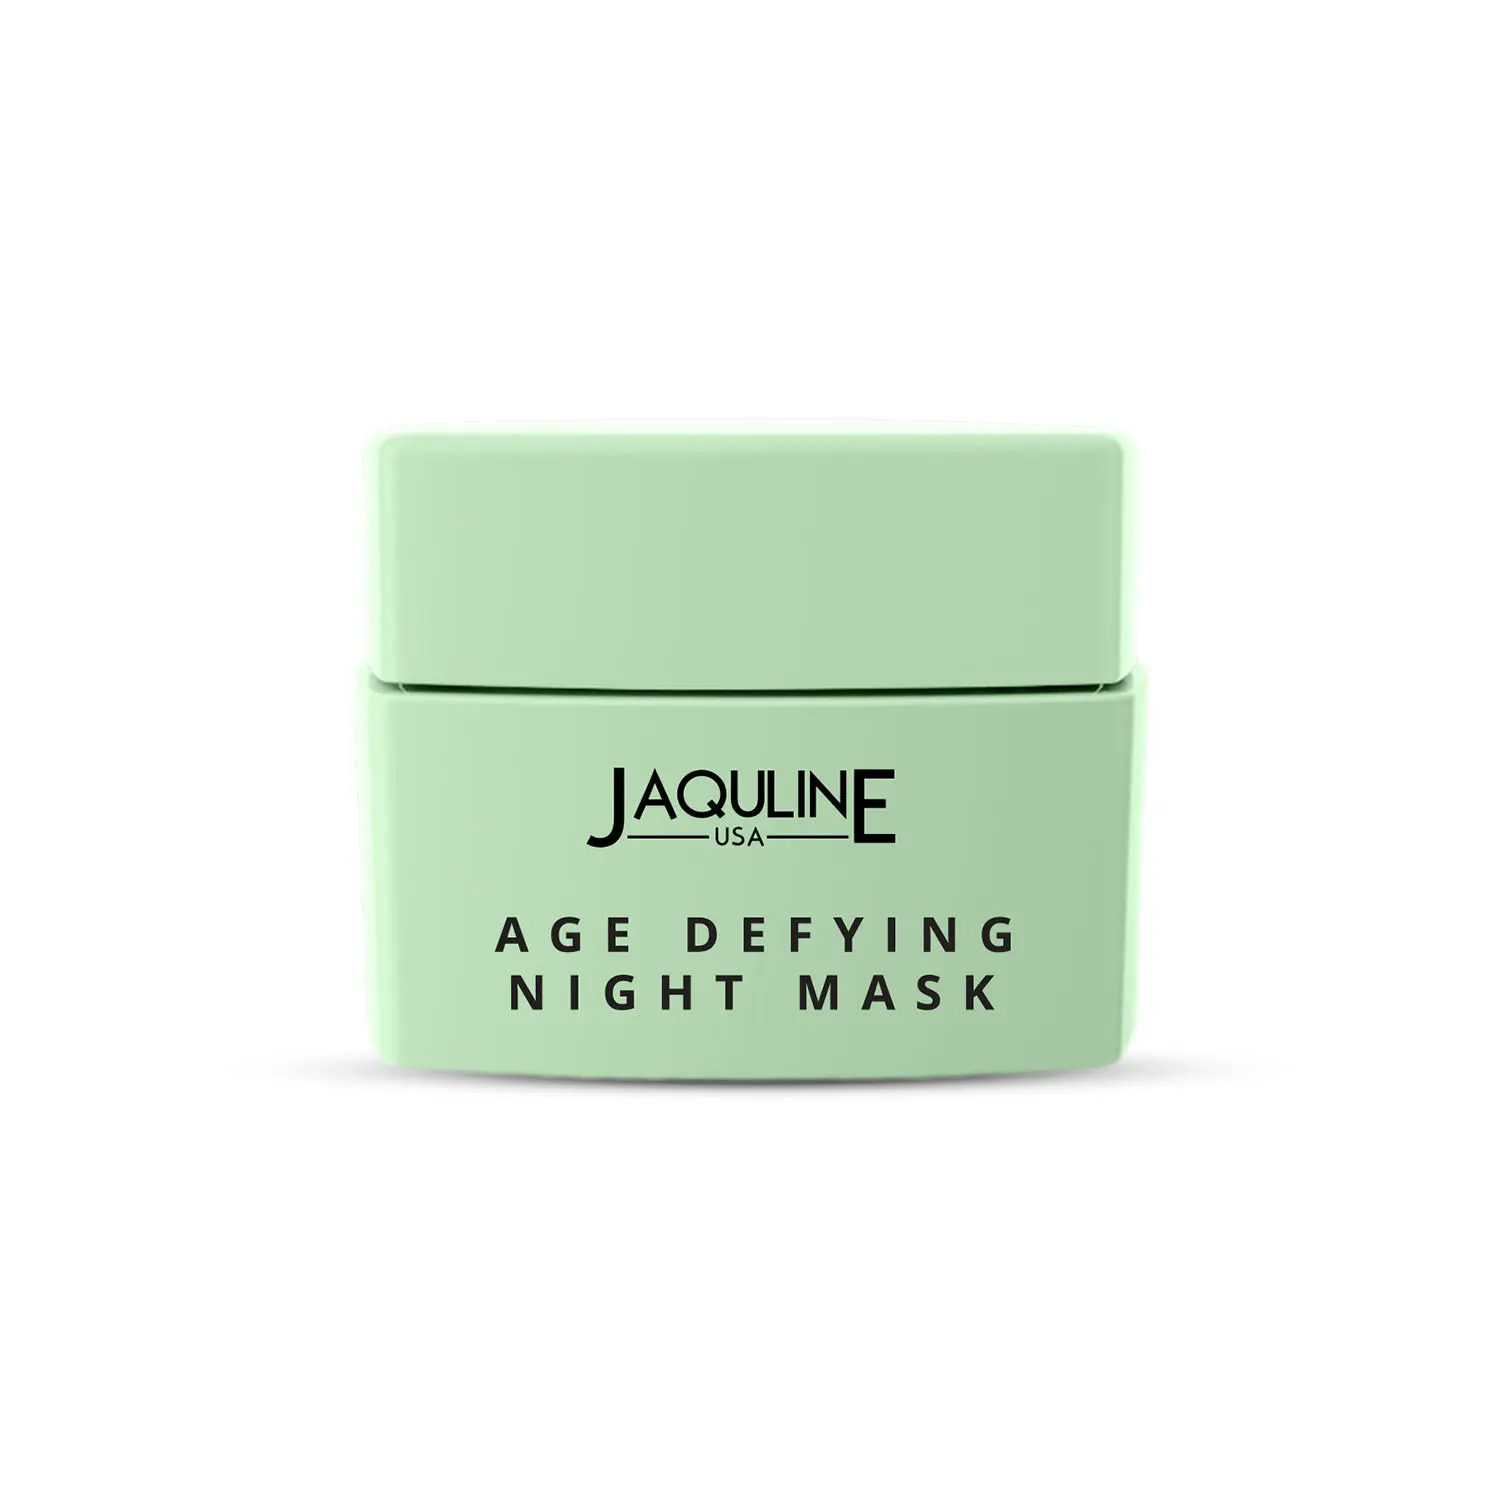 Jaquline USA Age defying Night Mask 50g